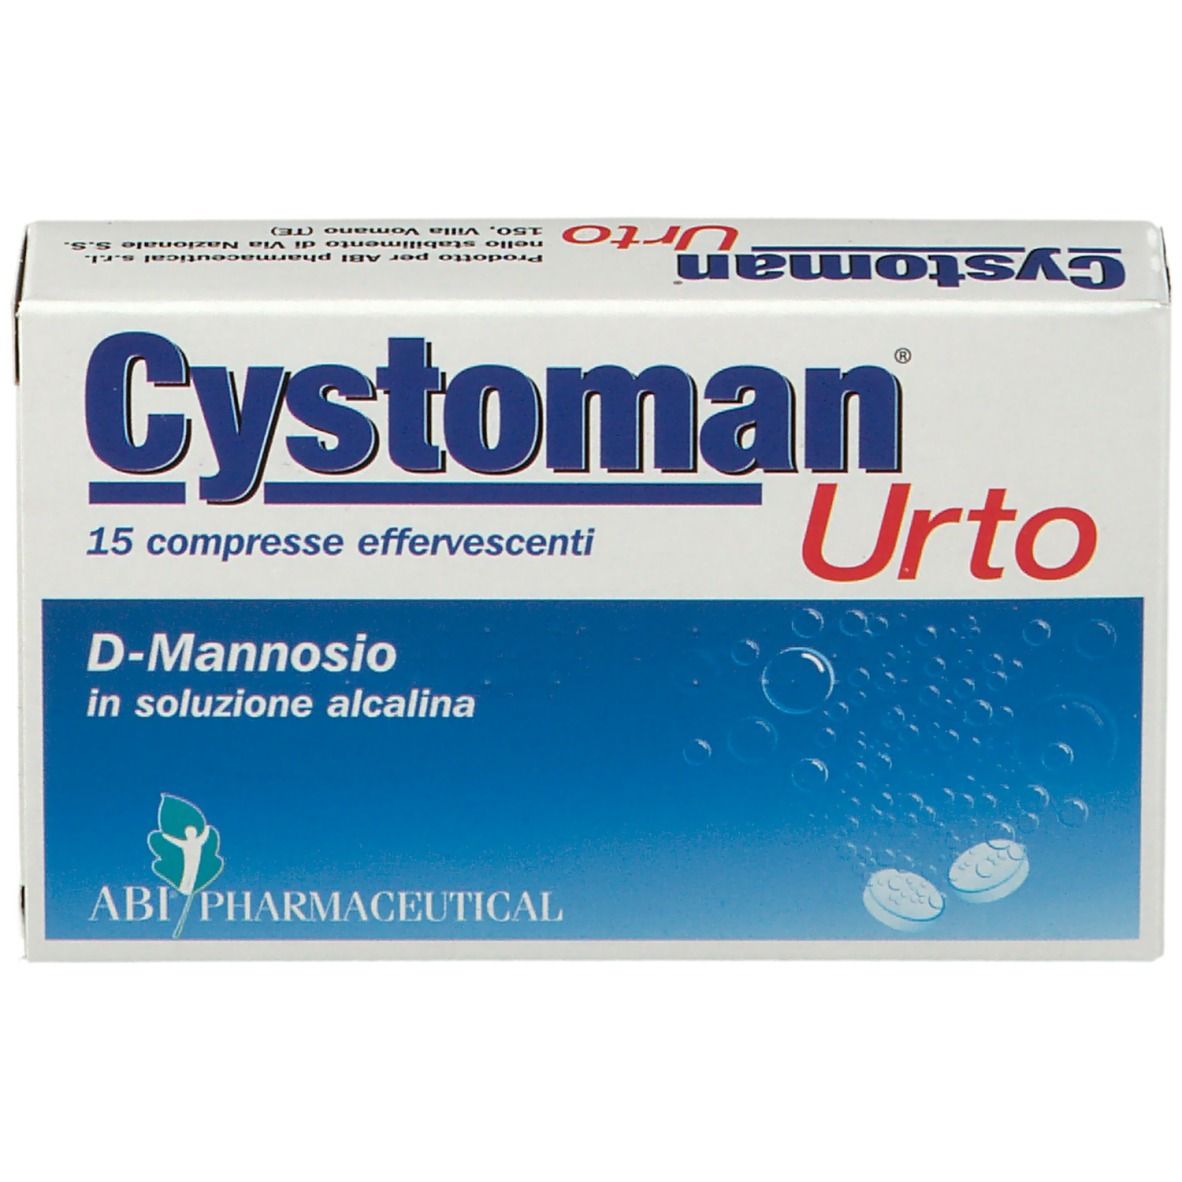 Cystoman® Urto